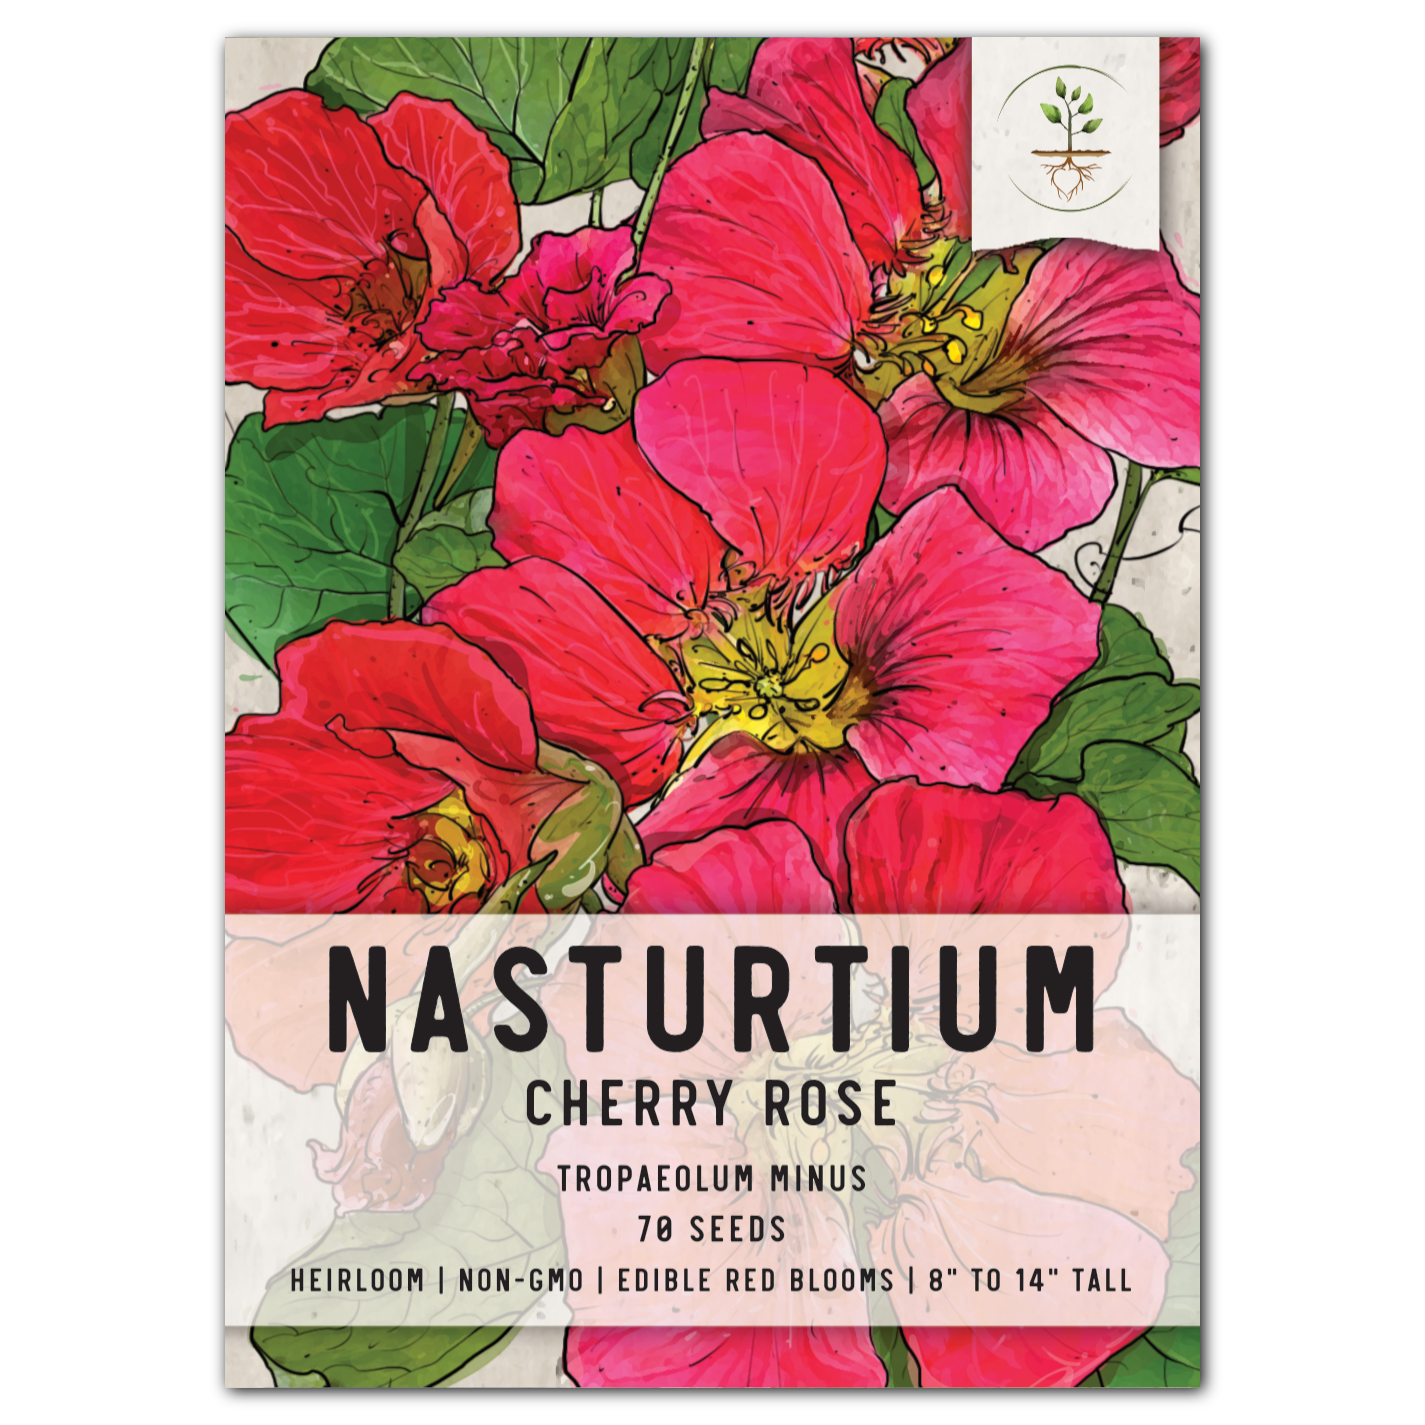 Cherry Rose Nasturtium Seeds For Planting (Tropaeolum minus)